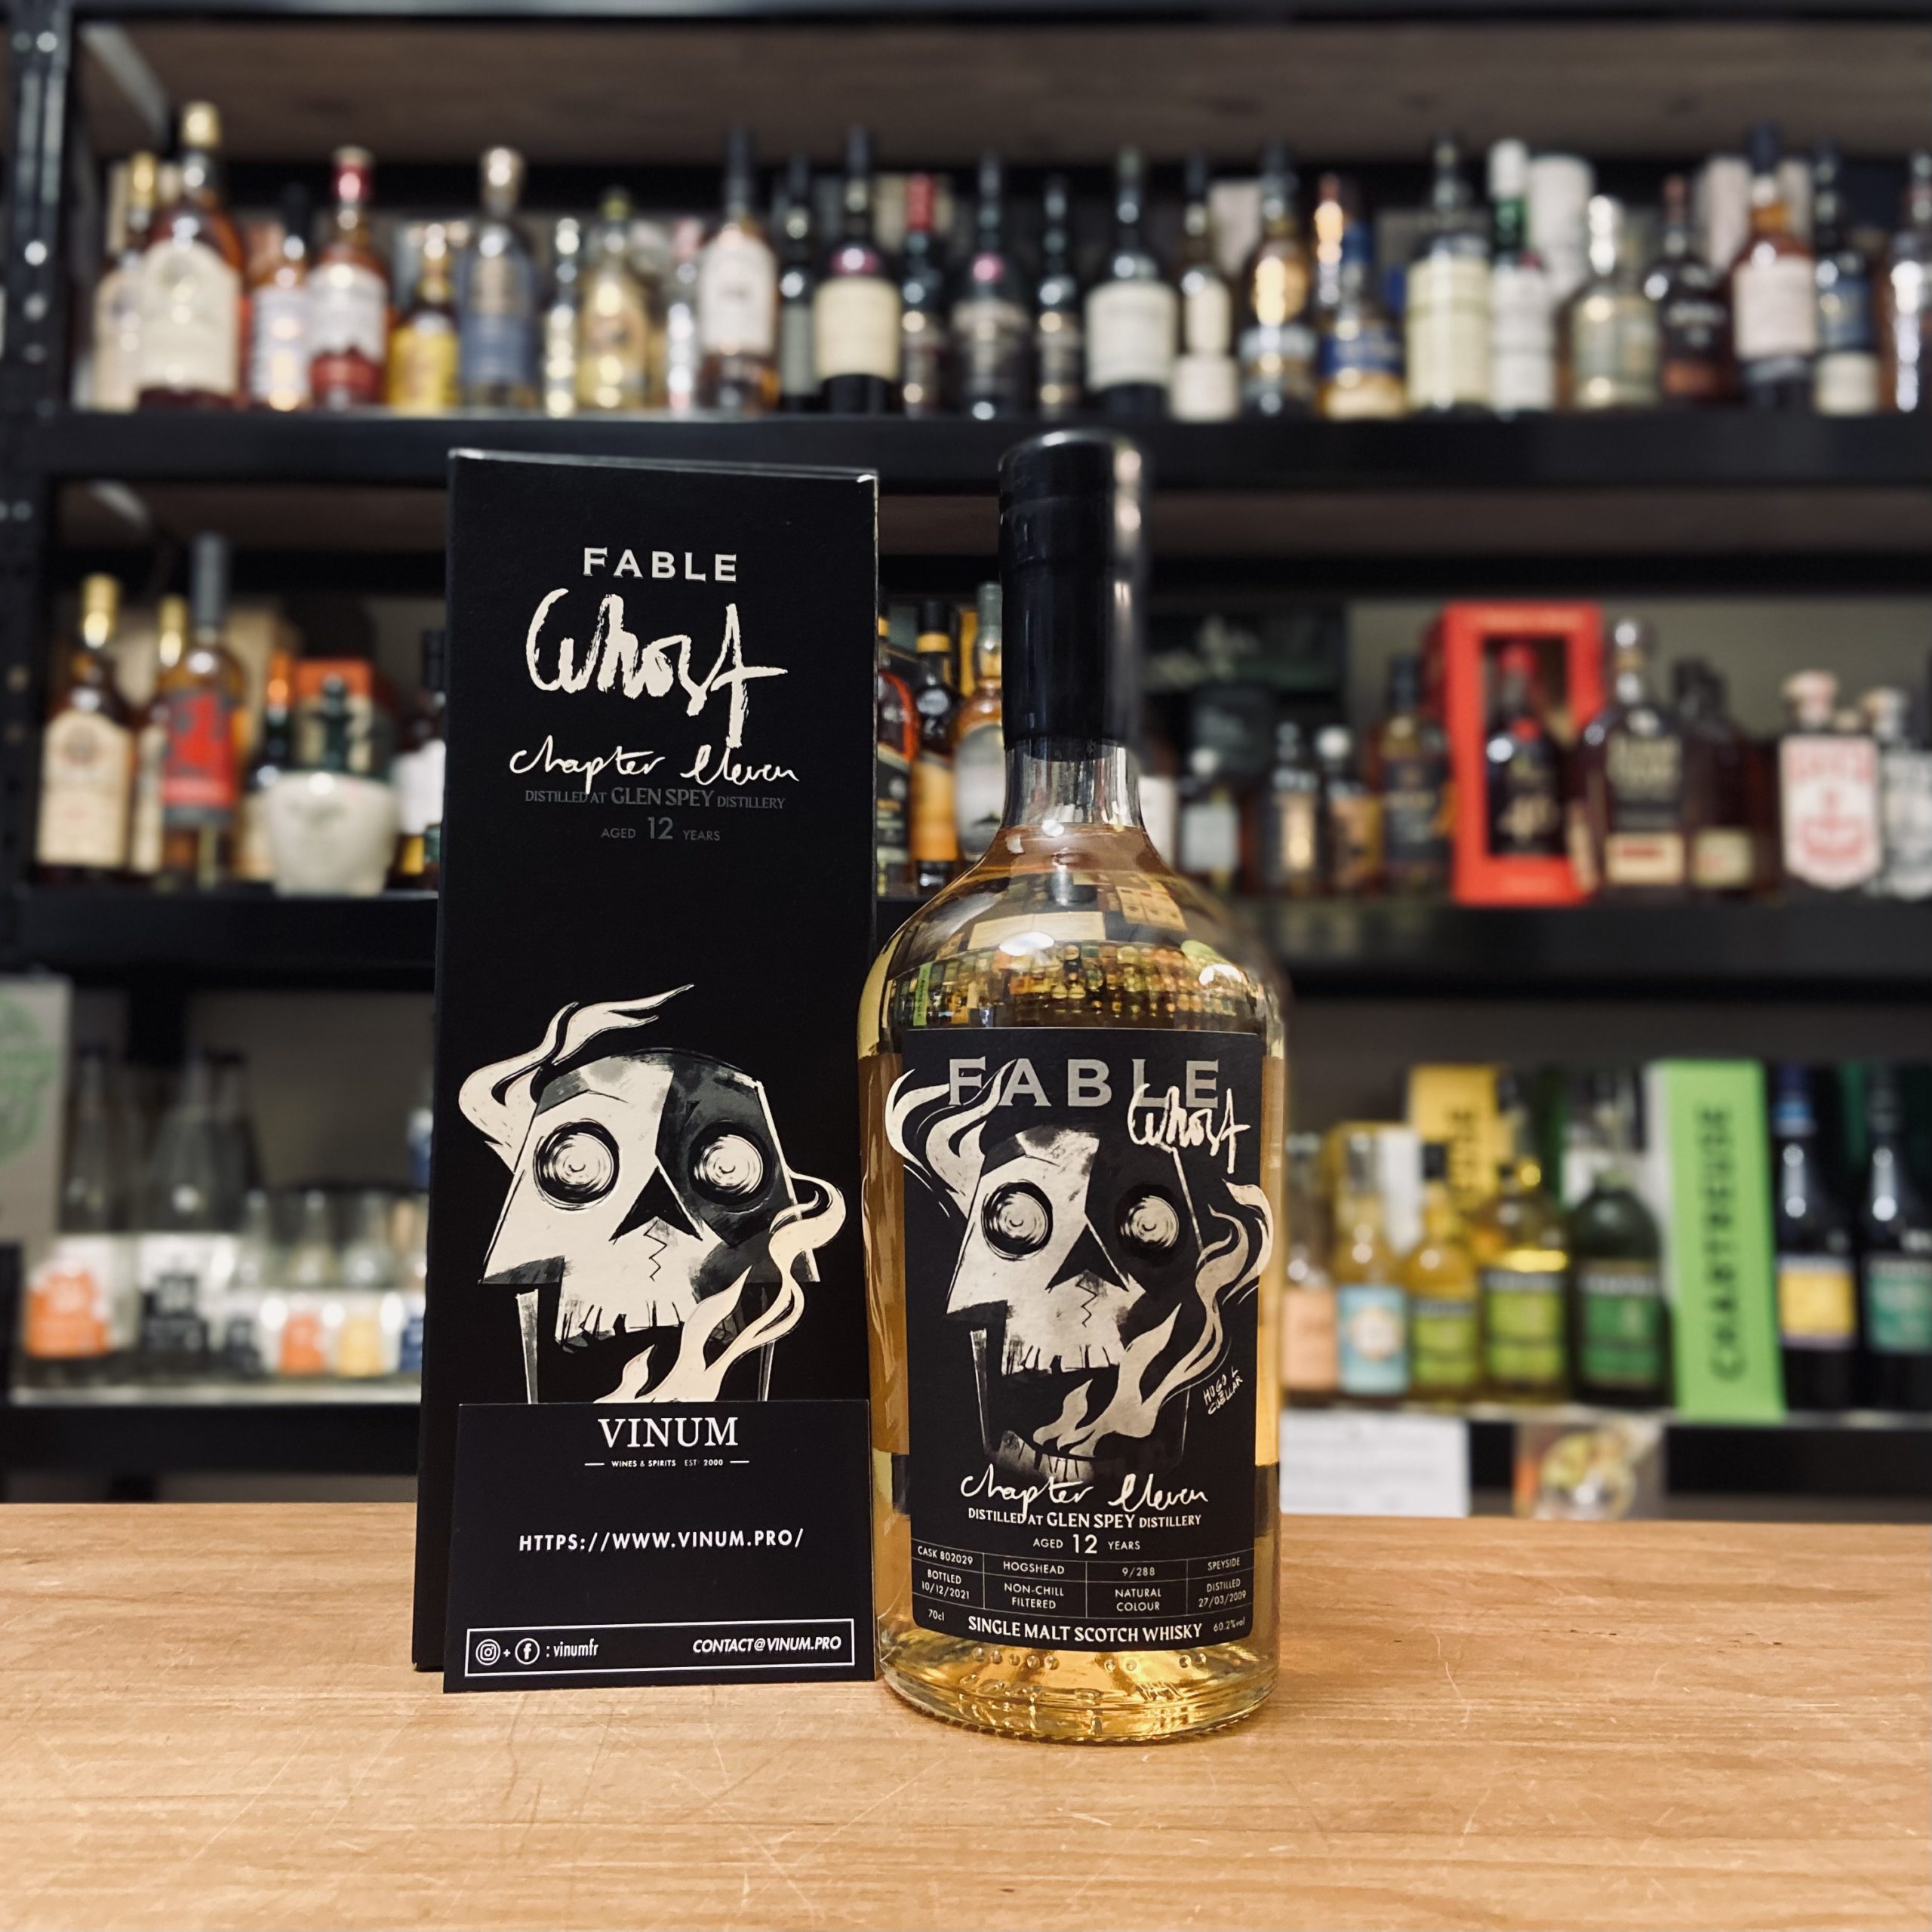 Fable Whisky Chapter 11 The Ghost Glen Spey 12 ans | VINUM | Vins